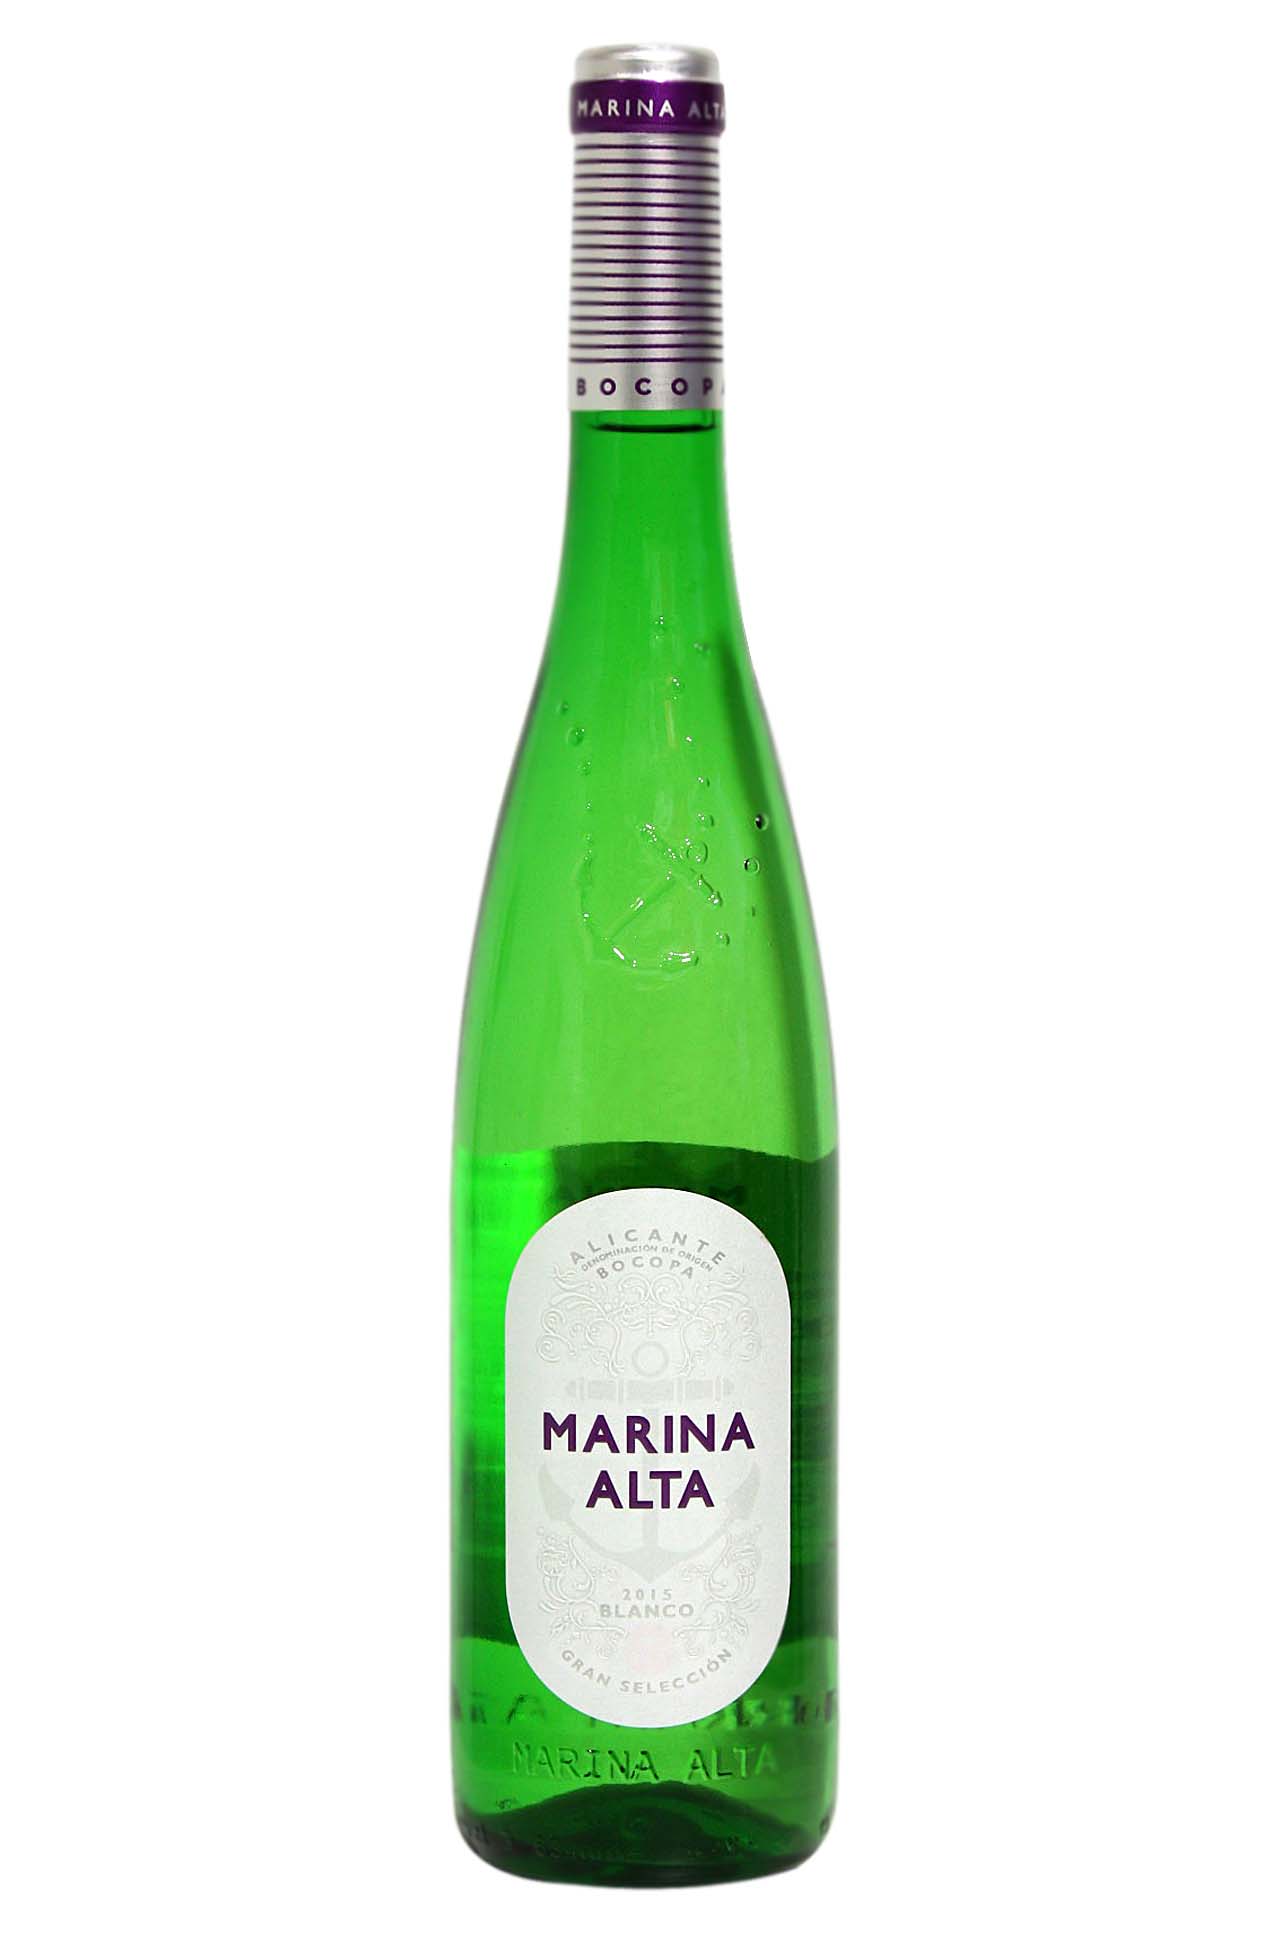 Marina Alta white wine